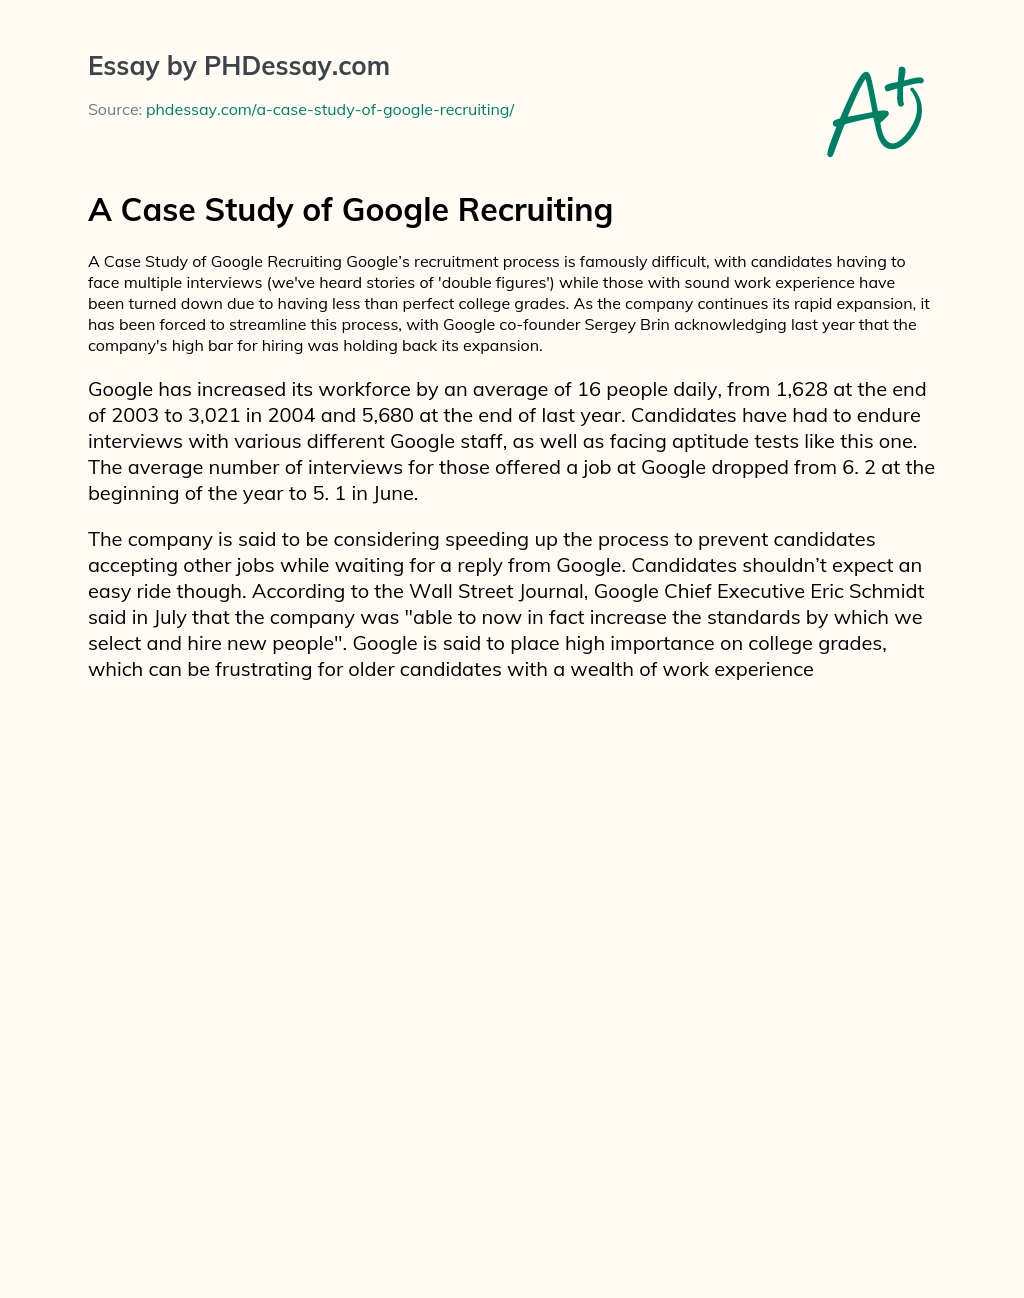 a case study of google recruiting